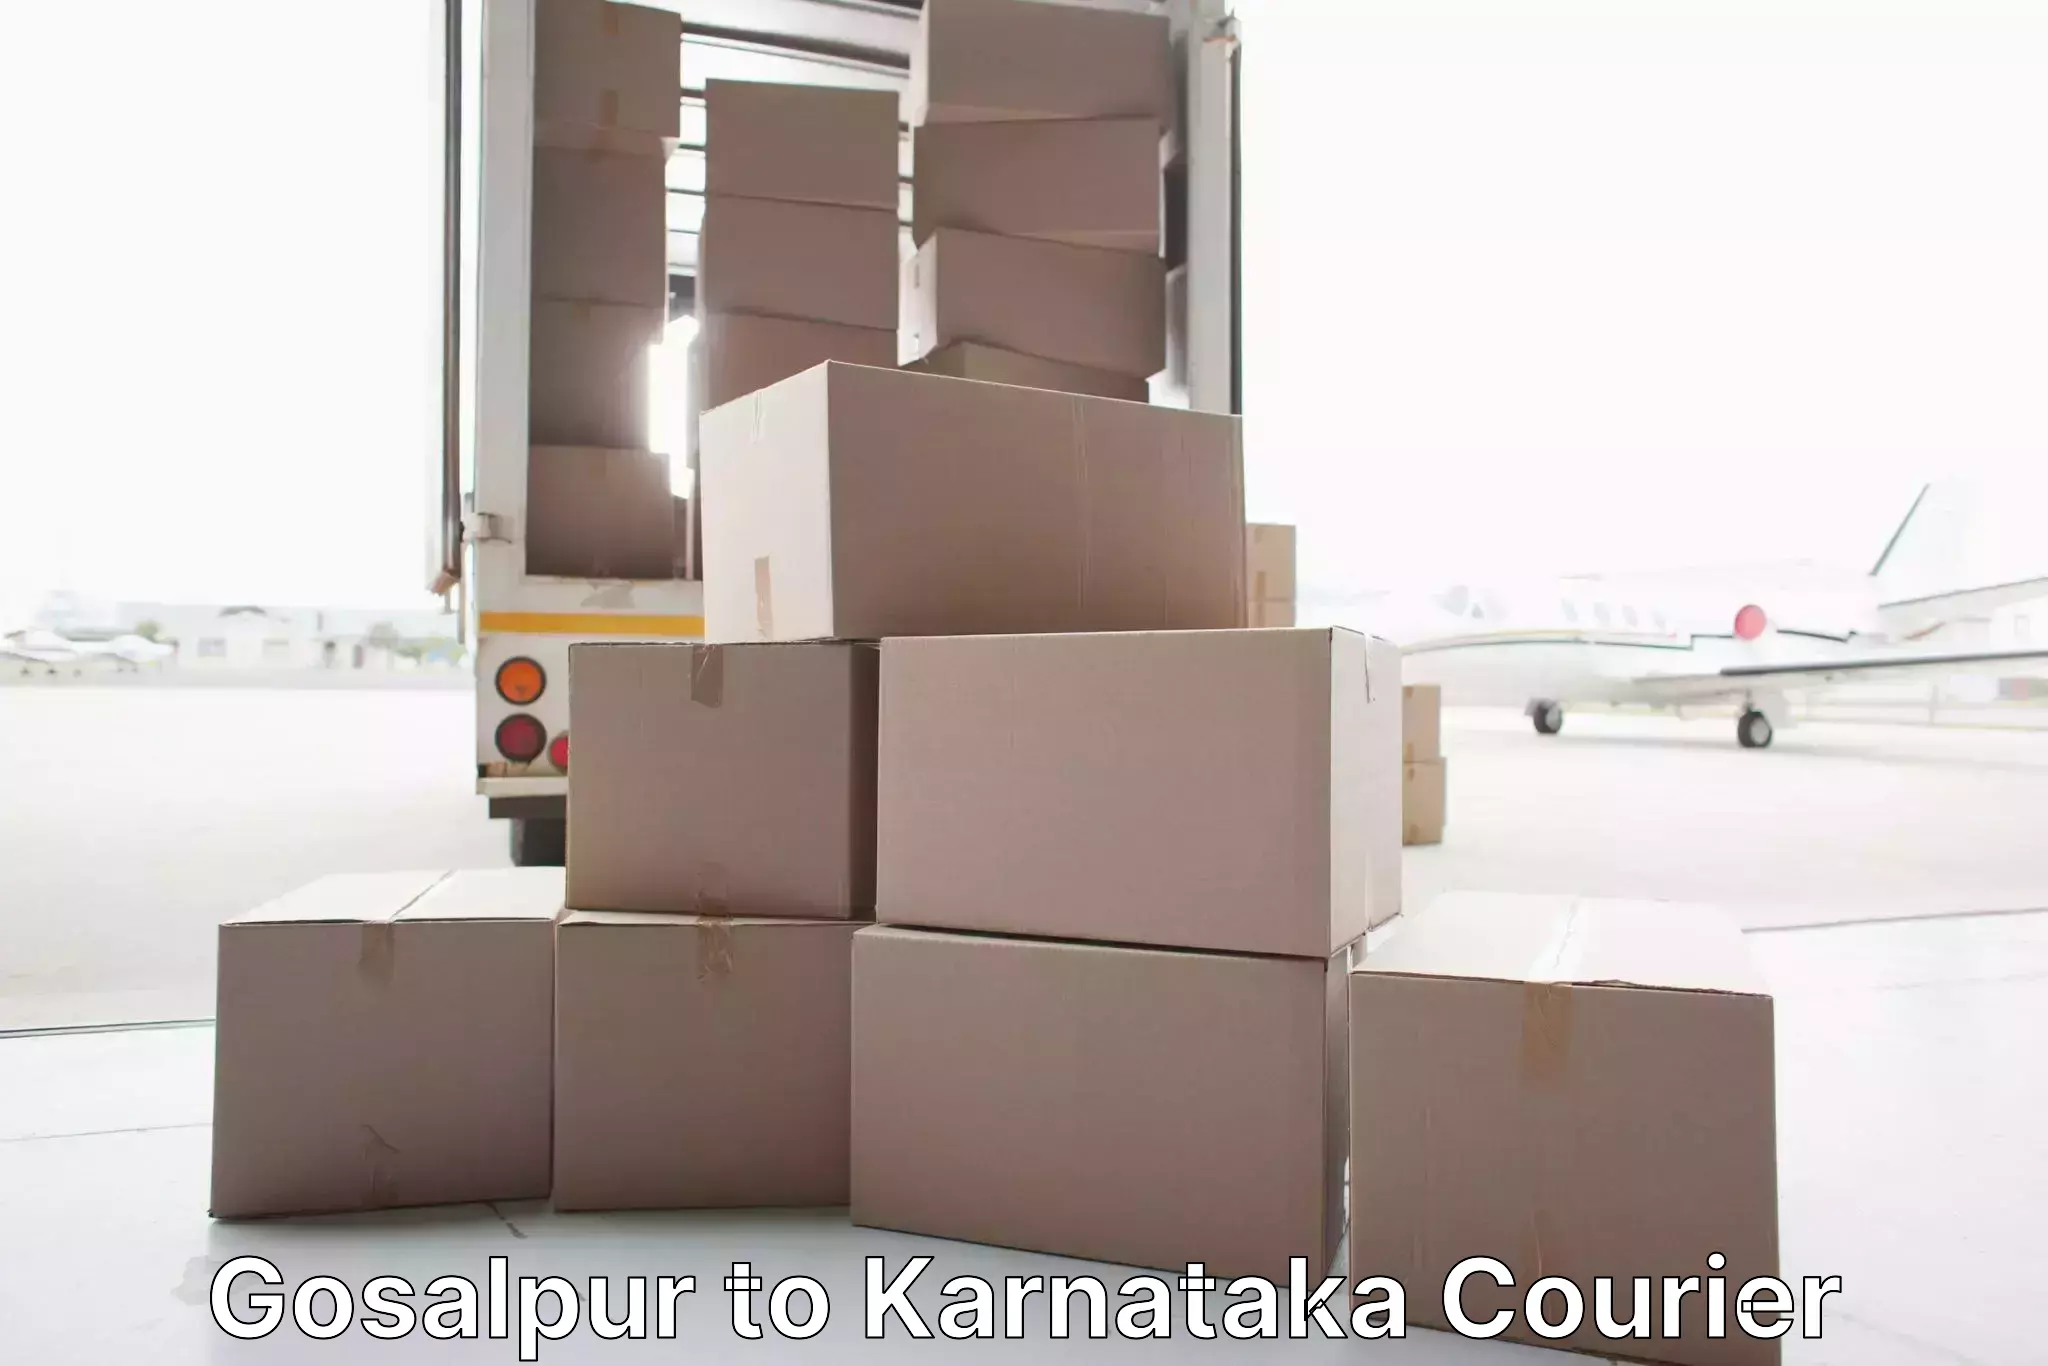 Home relocation experts Gosalpur to Karnataka